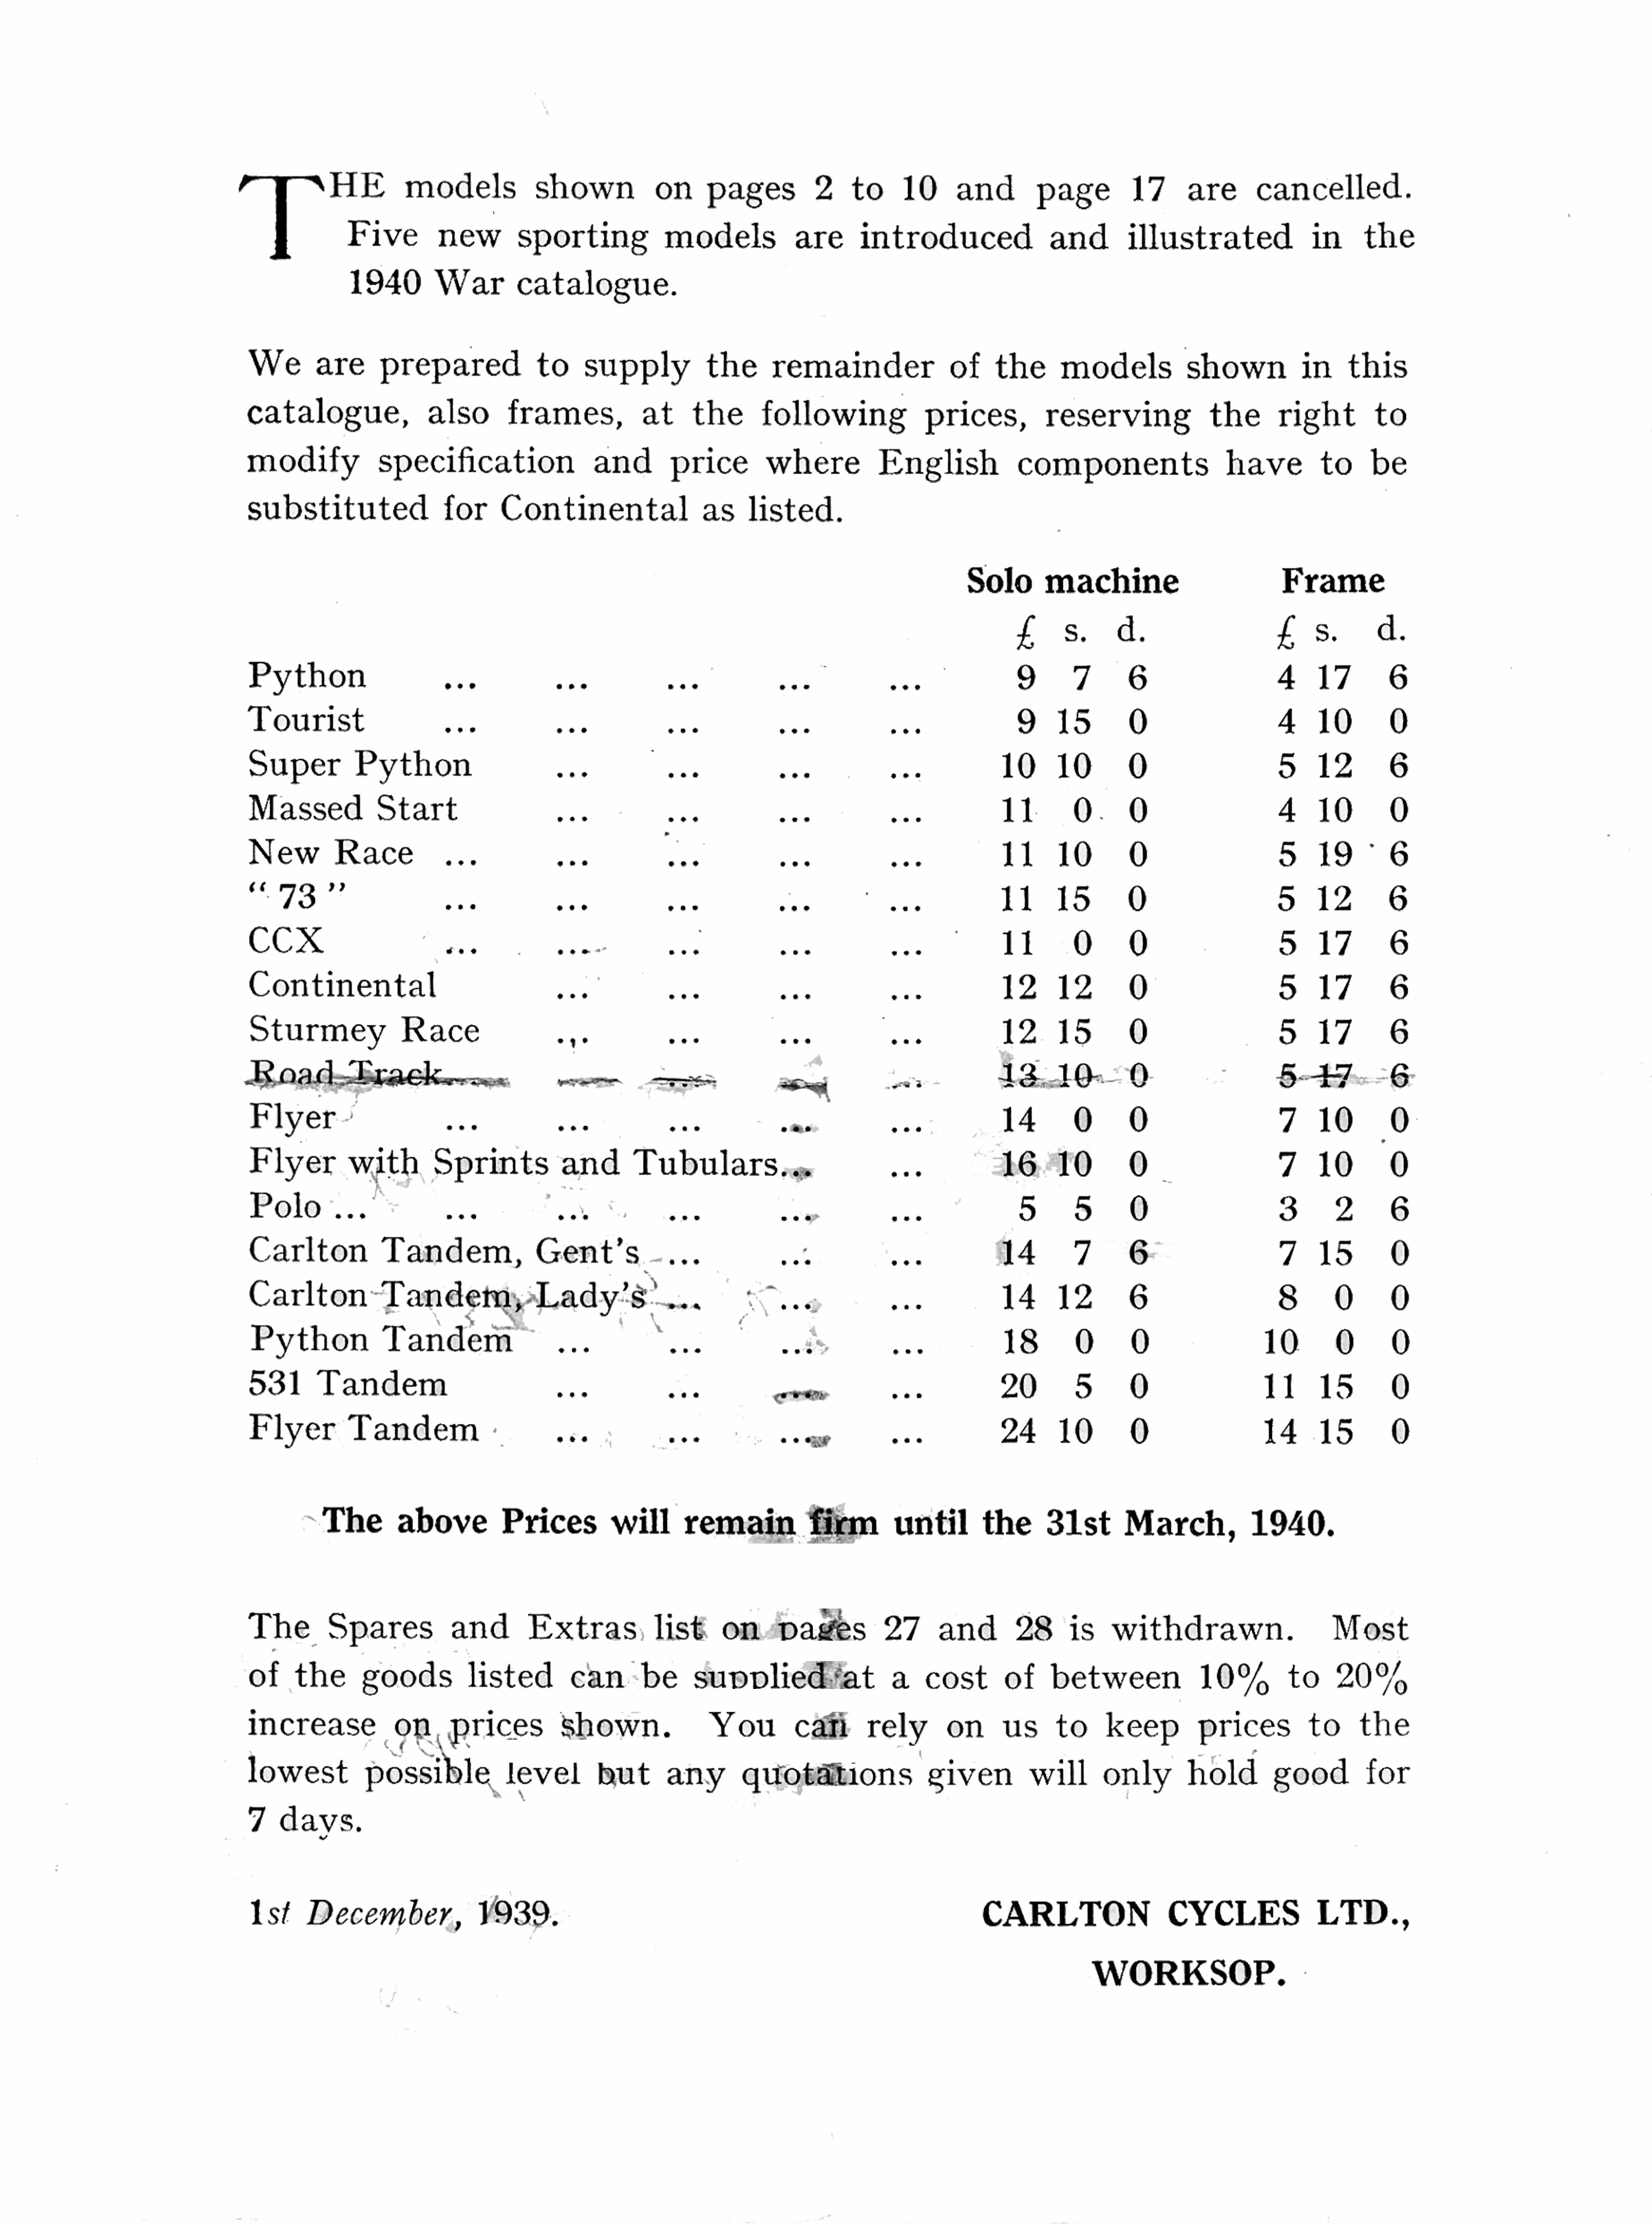 1939 Carlton Cycles Price List